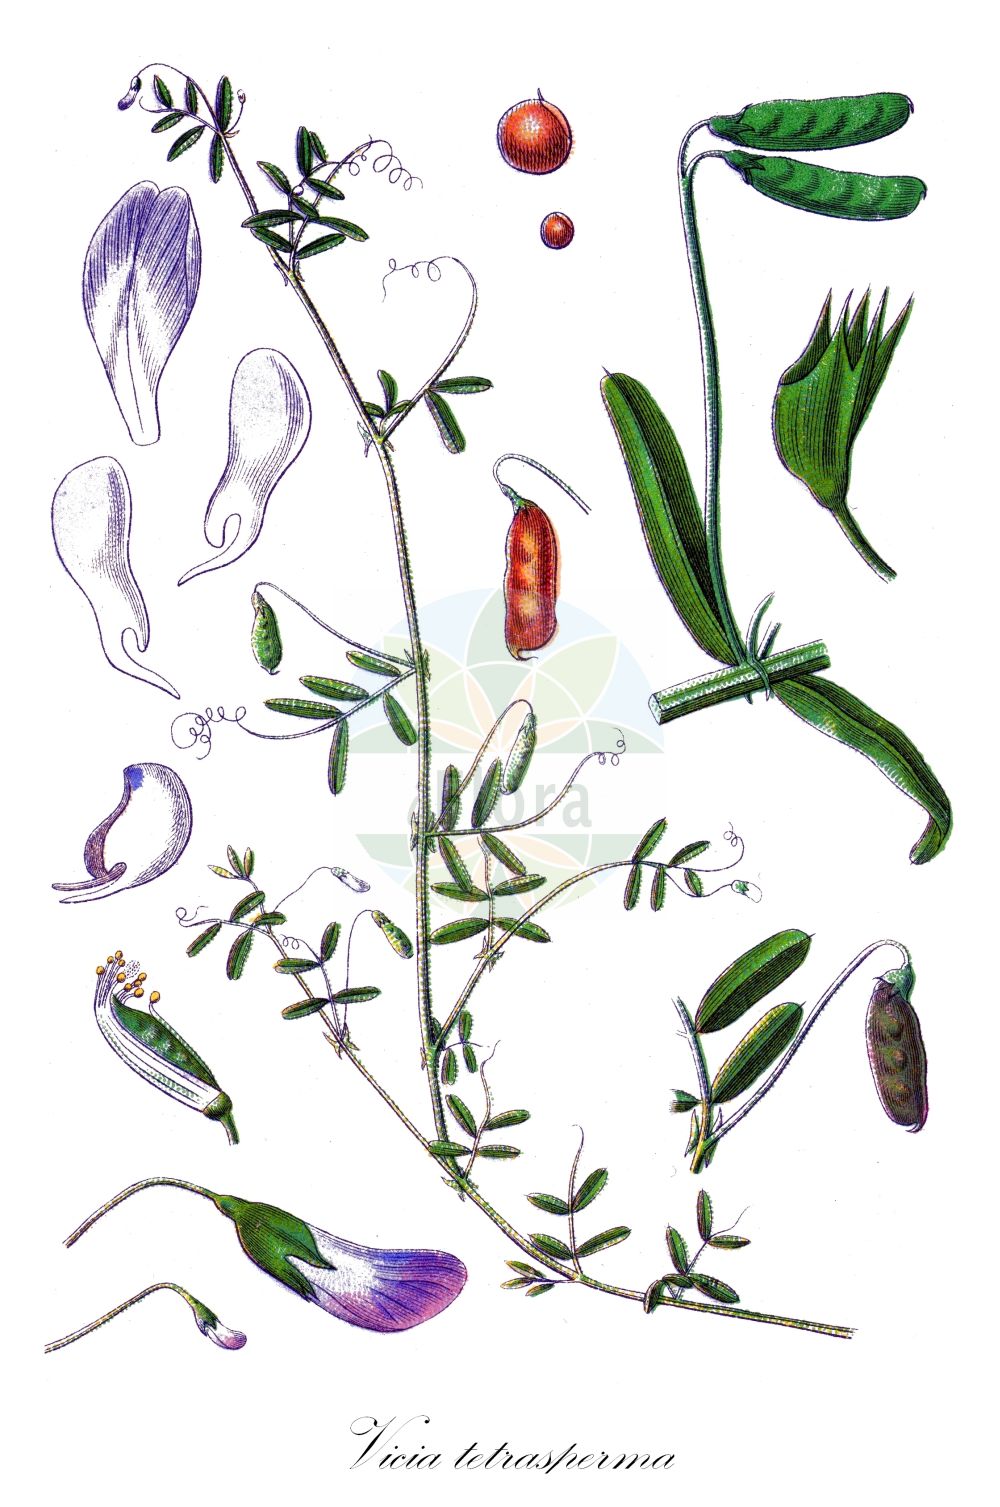 Historische Abbildung von Vicia tetrasperma (Viersamige Wicke - Smooth Tare). Das Bild zeigt Blatt, Bluete, Frucht und Same. ---- Historical Drawing of Vicia tetrasperma (Viersamige Wicke - Smooth Tare). The image is showing leaf, flower, fruit and seed.(Vicia tetrasperma,Viersamige Wicke,Smooth Tare,Ervum tenuissimum,Ervum tetraspermum,Vicia gemella,Vicia tetrasperma,Vicia tetrasperma var. gracilis,Viersamige Wicke,Viersamige Wicke,Smooth Tare,Four-seed Vetch,Lentil Vetch,Lentil Tare,Slender Vetch,Sparrow Vetch,Vicia,Wicke,Vetch,Fabaceae,Schmetterlingsblütler,Pea family,Blatt,Bluete,Frucht,Same,leaf,flower,fruit,seed,Sturm (1796f))